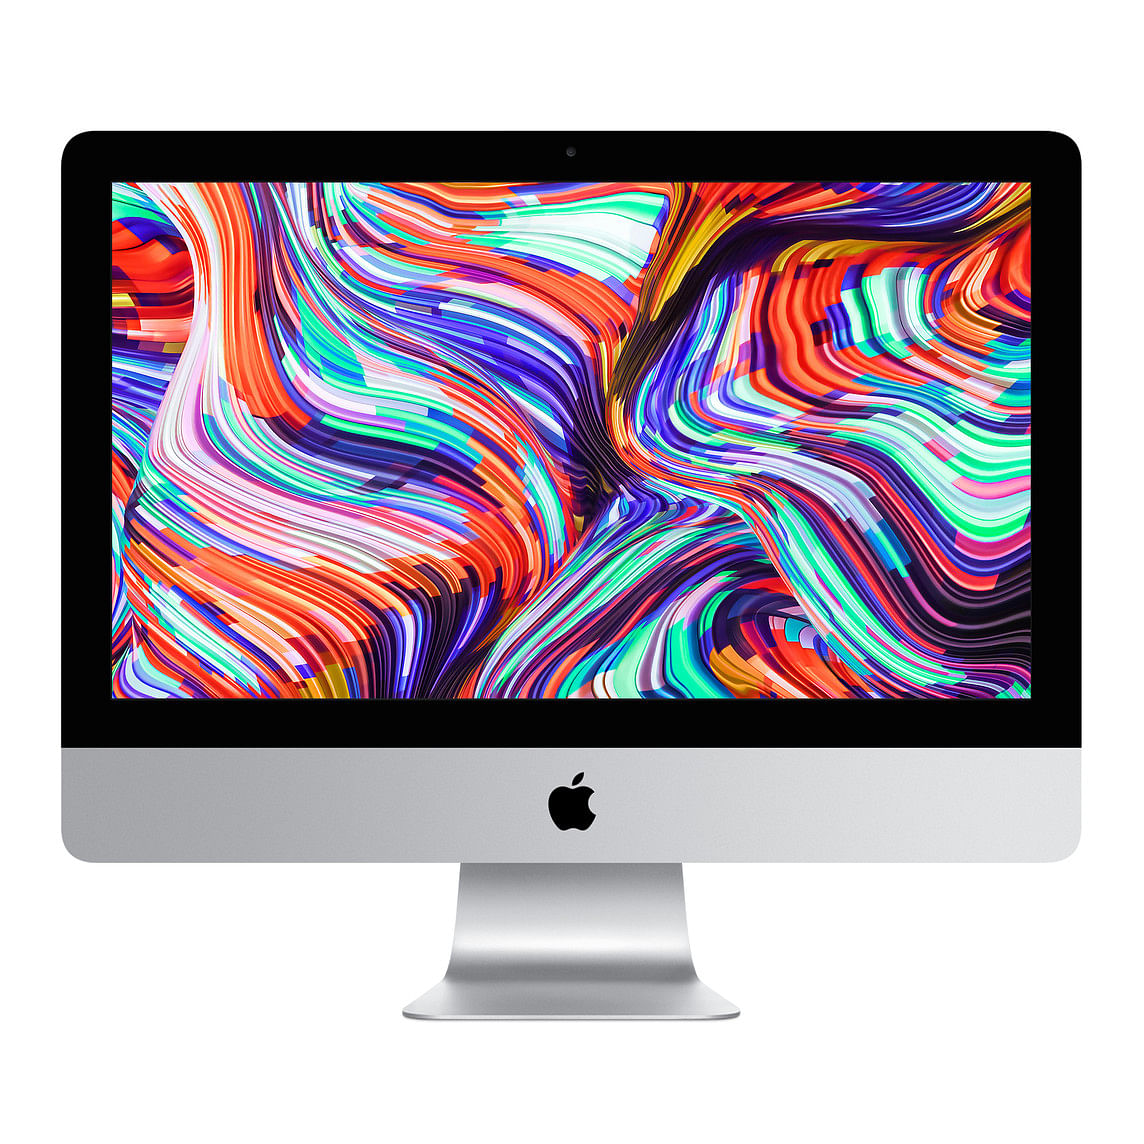 Apple iMac 21.5 بوصة (2019) شاشة عرض 4K Core i5 - ذاكرة وصول عشوائي (RAM) سعة 1 تيرابايت - 1 تيرابايت فيوجن 4 جيجا بايت - مع رسومات ماجيك 2 كيلو بايت وماوس / فضي